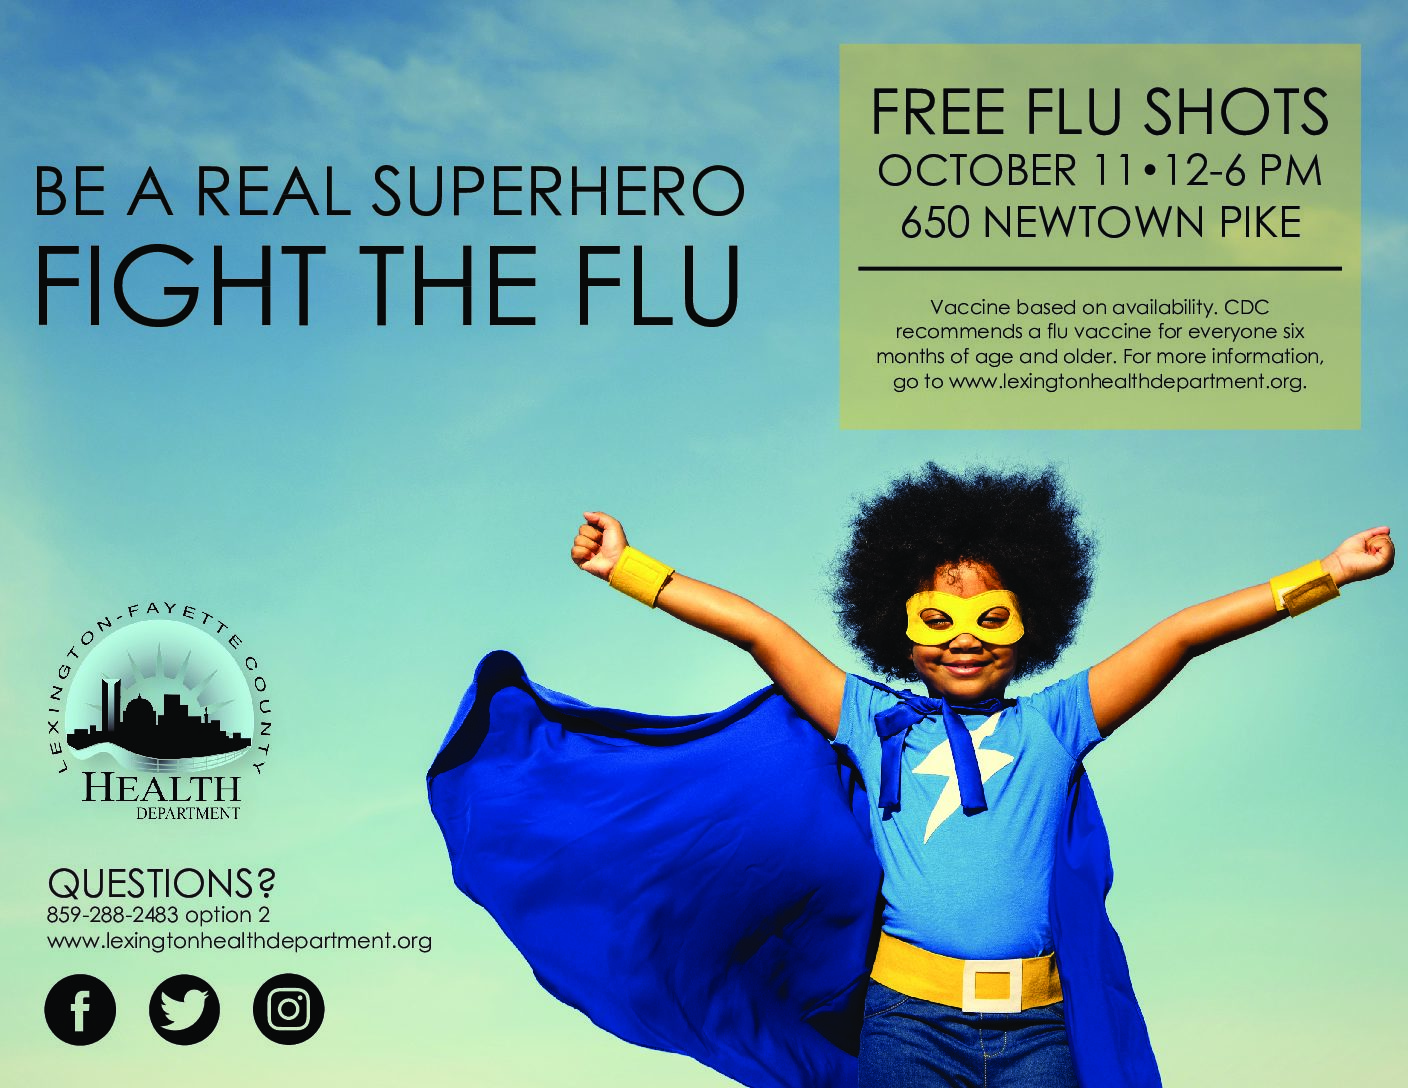 Annual free flu shot event returns Oct. 11, 2018